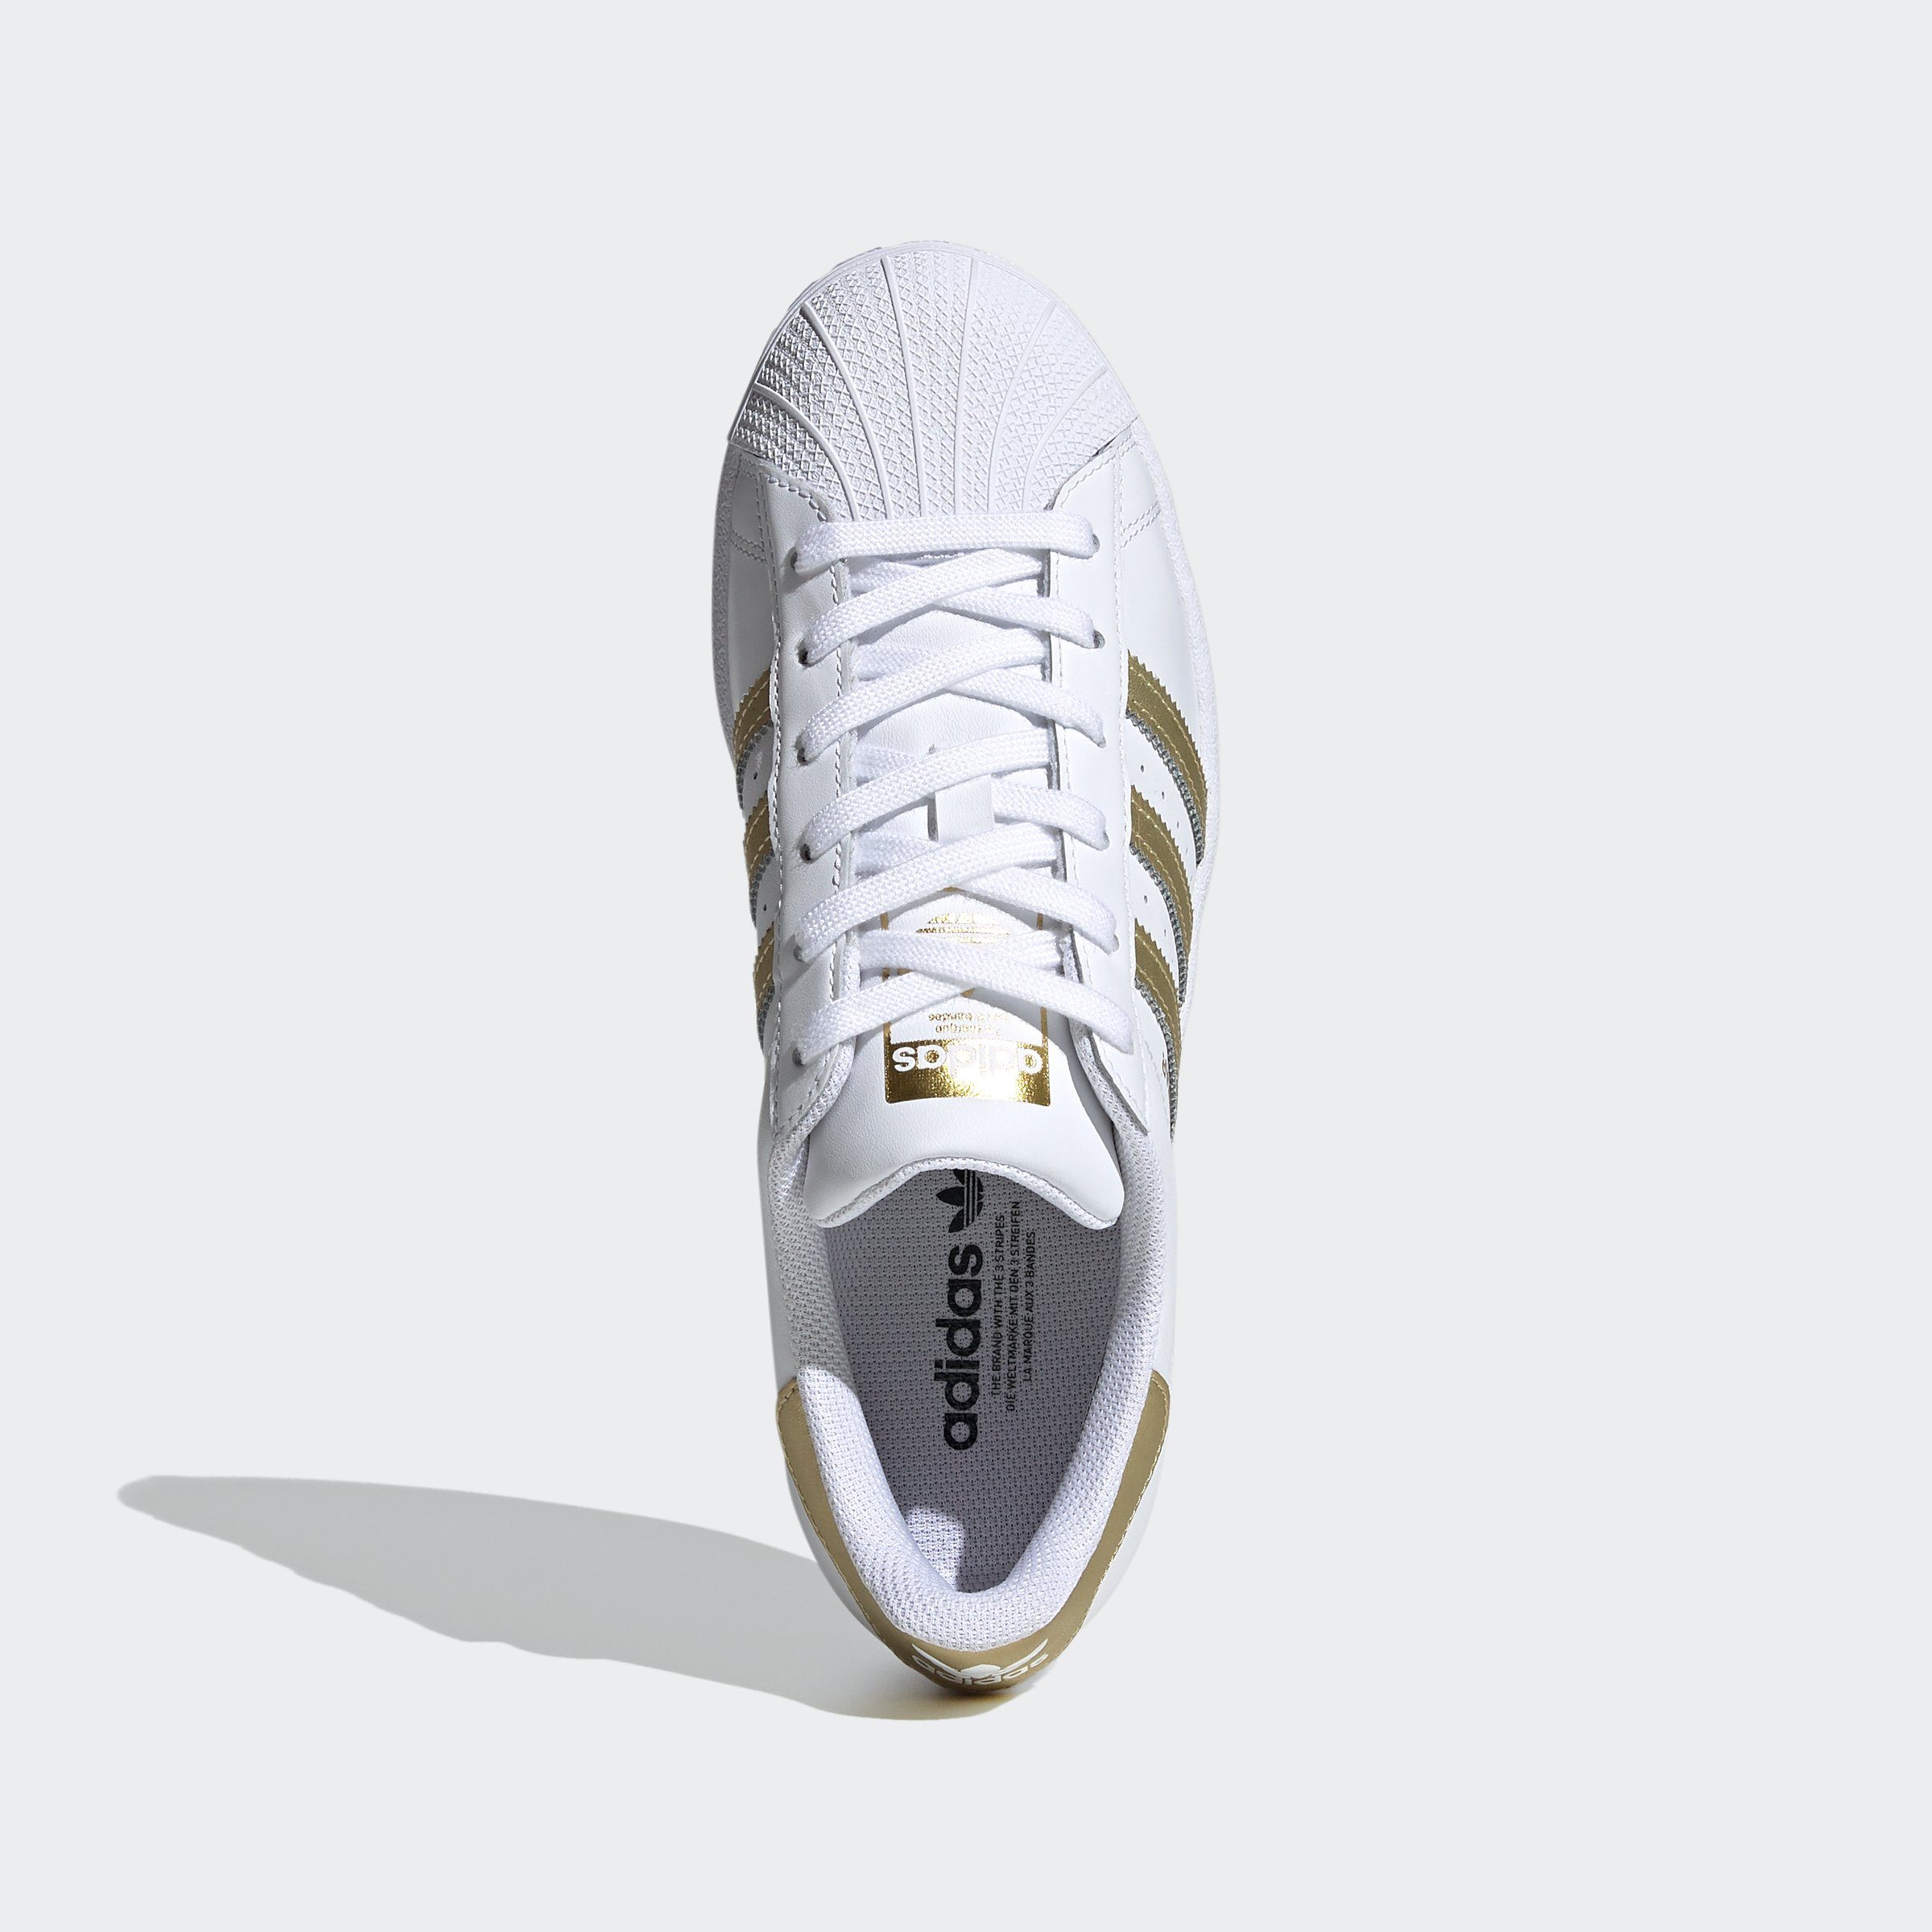 Sneaker adidas / White SUPERSTAR Metallic / Cloud White Cloud Gold Originals